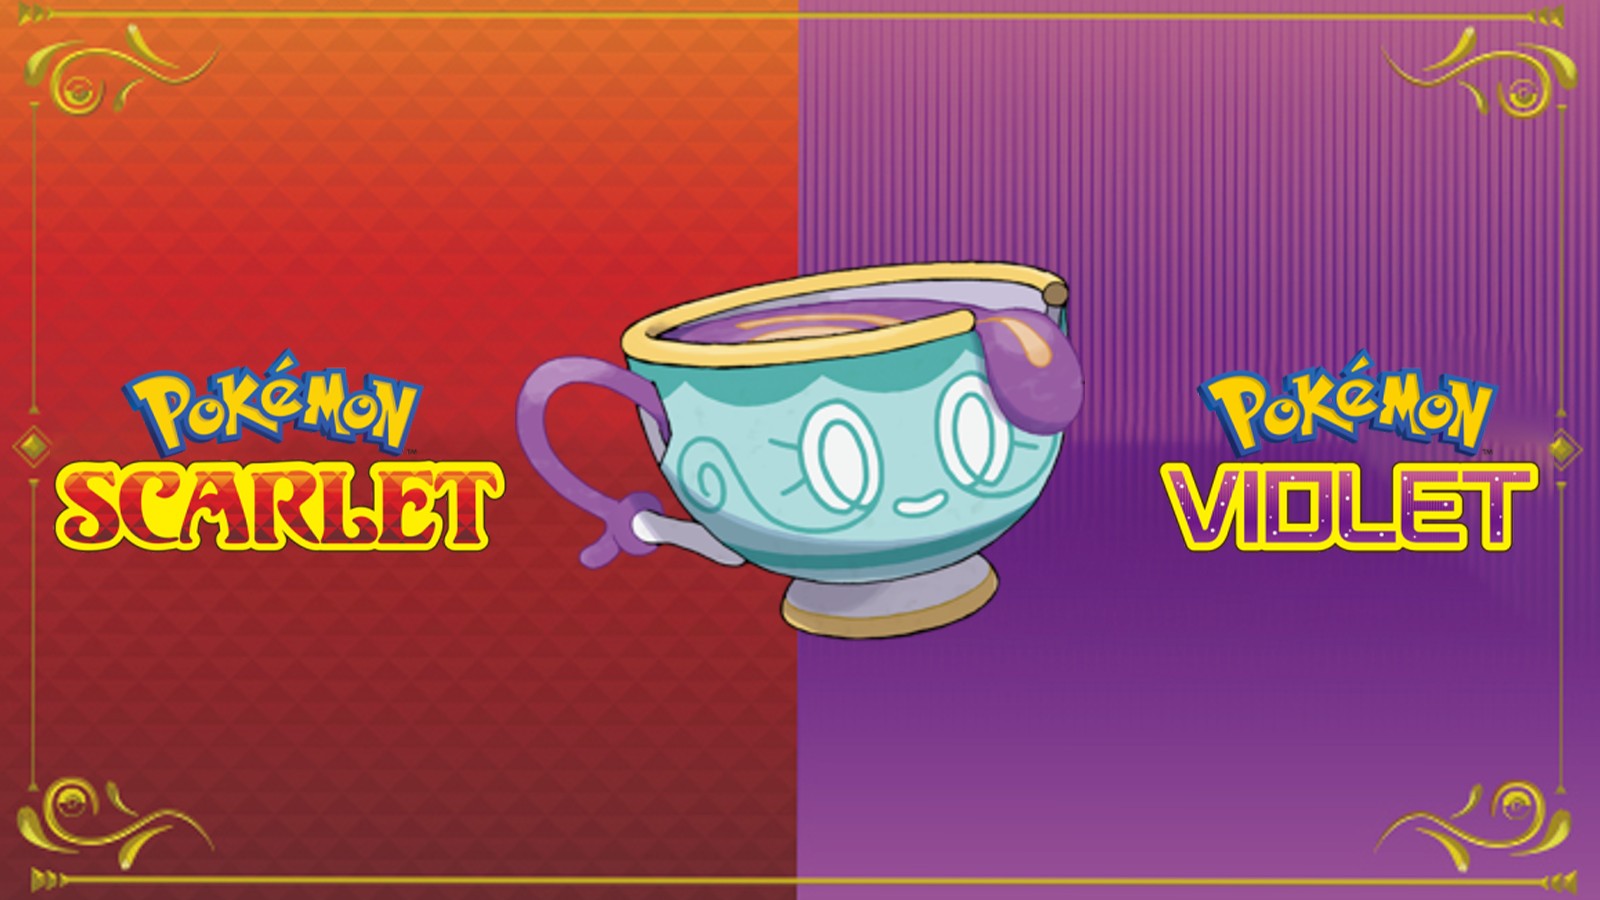 Pokemon Scarlet & Violet trade codes for version exclusives - Charlie INTEL